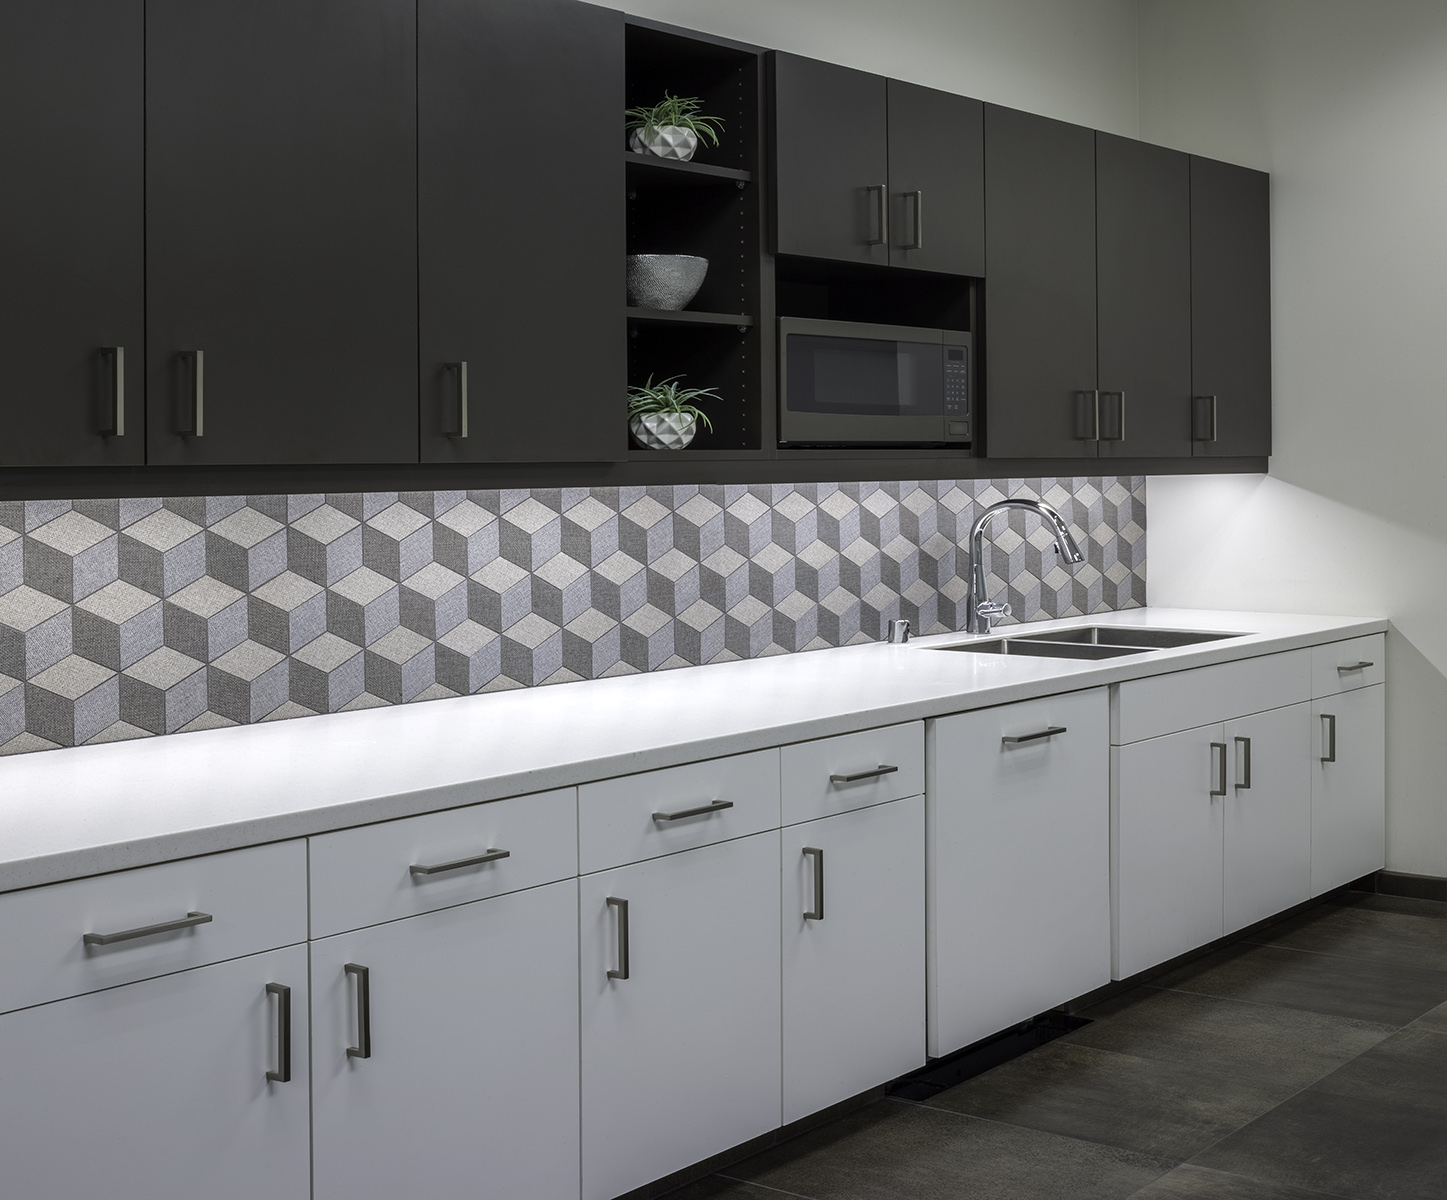 contemporary kitchen detail with geometric tile backsplash